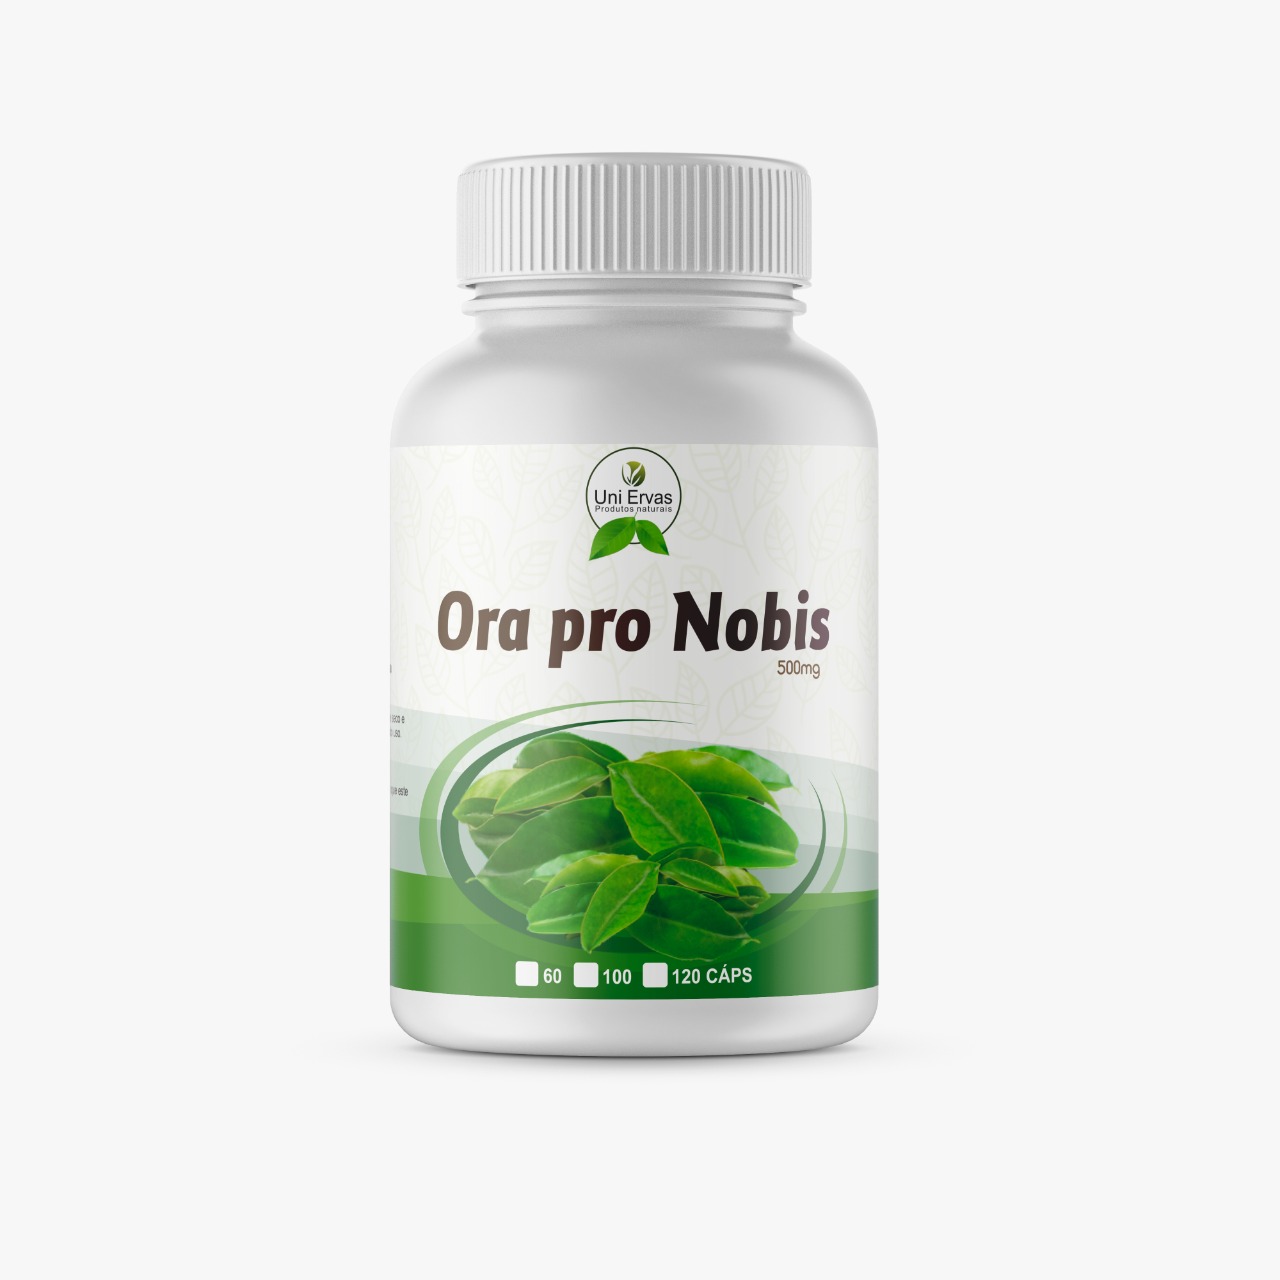 Ora-pro-nóbis 60 caps